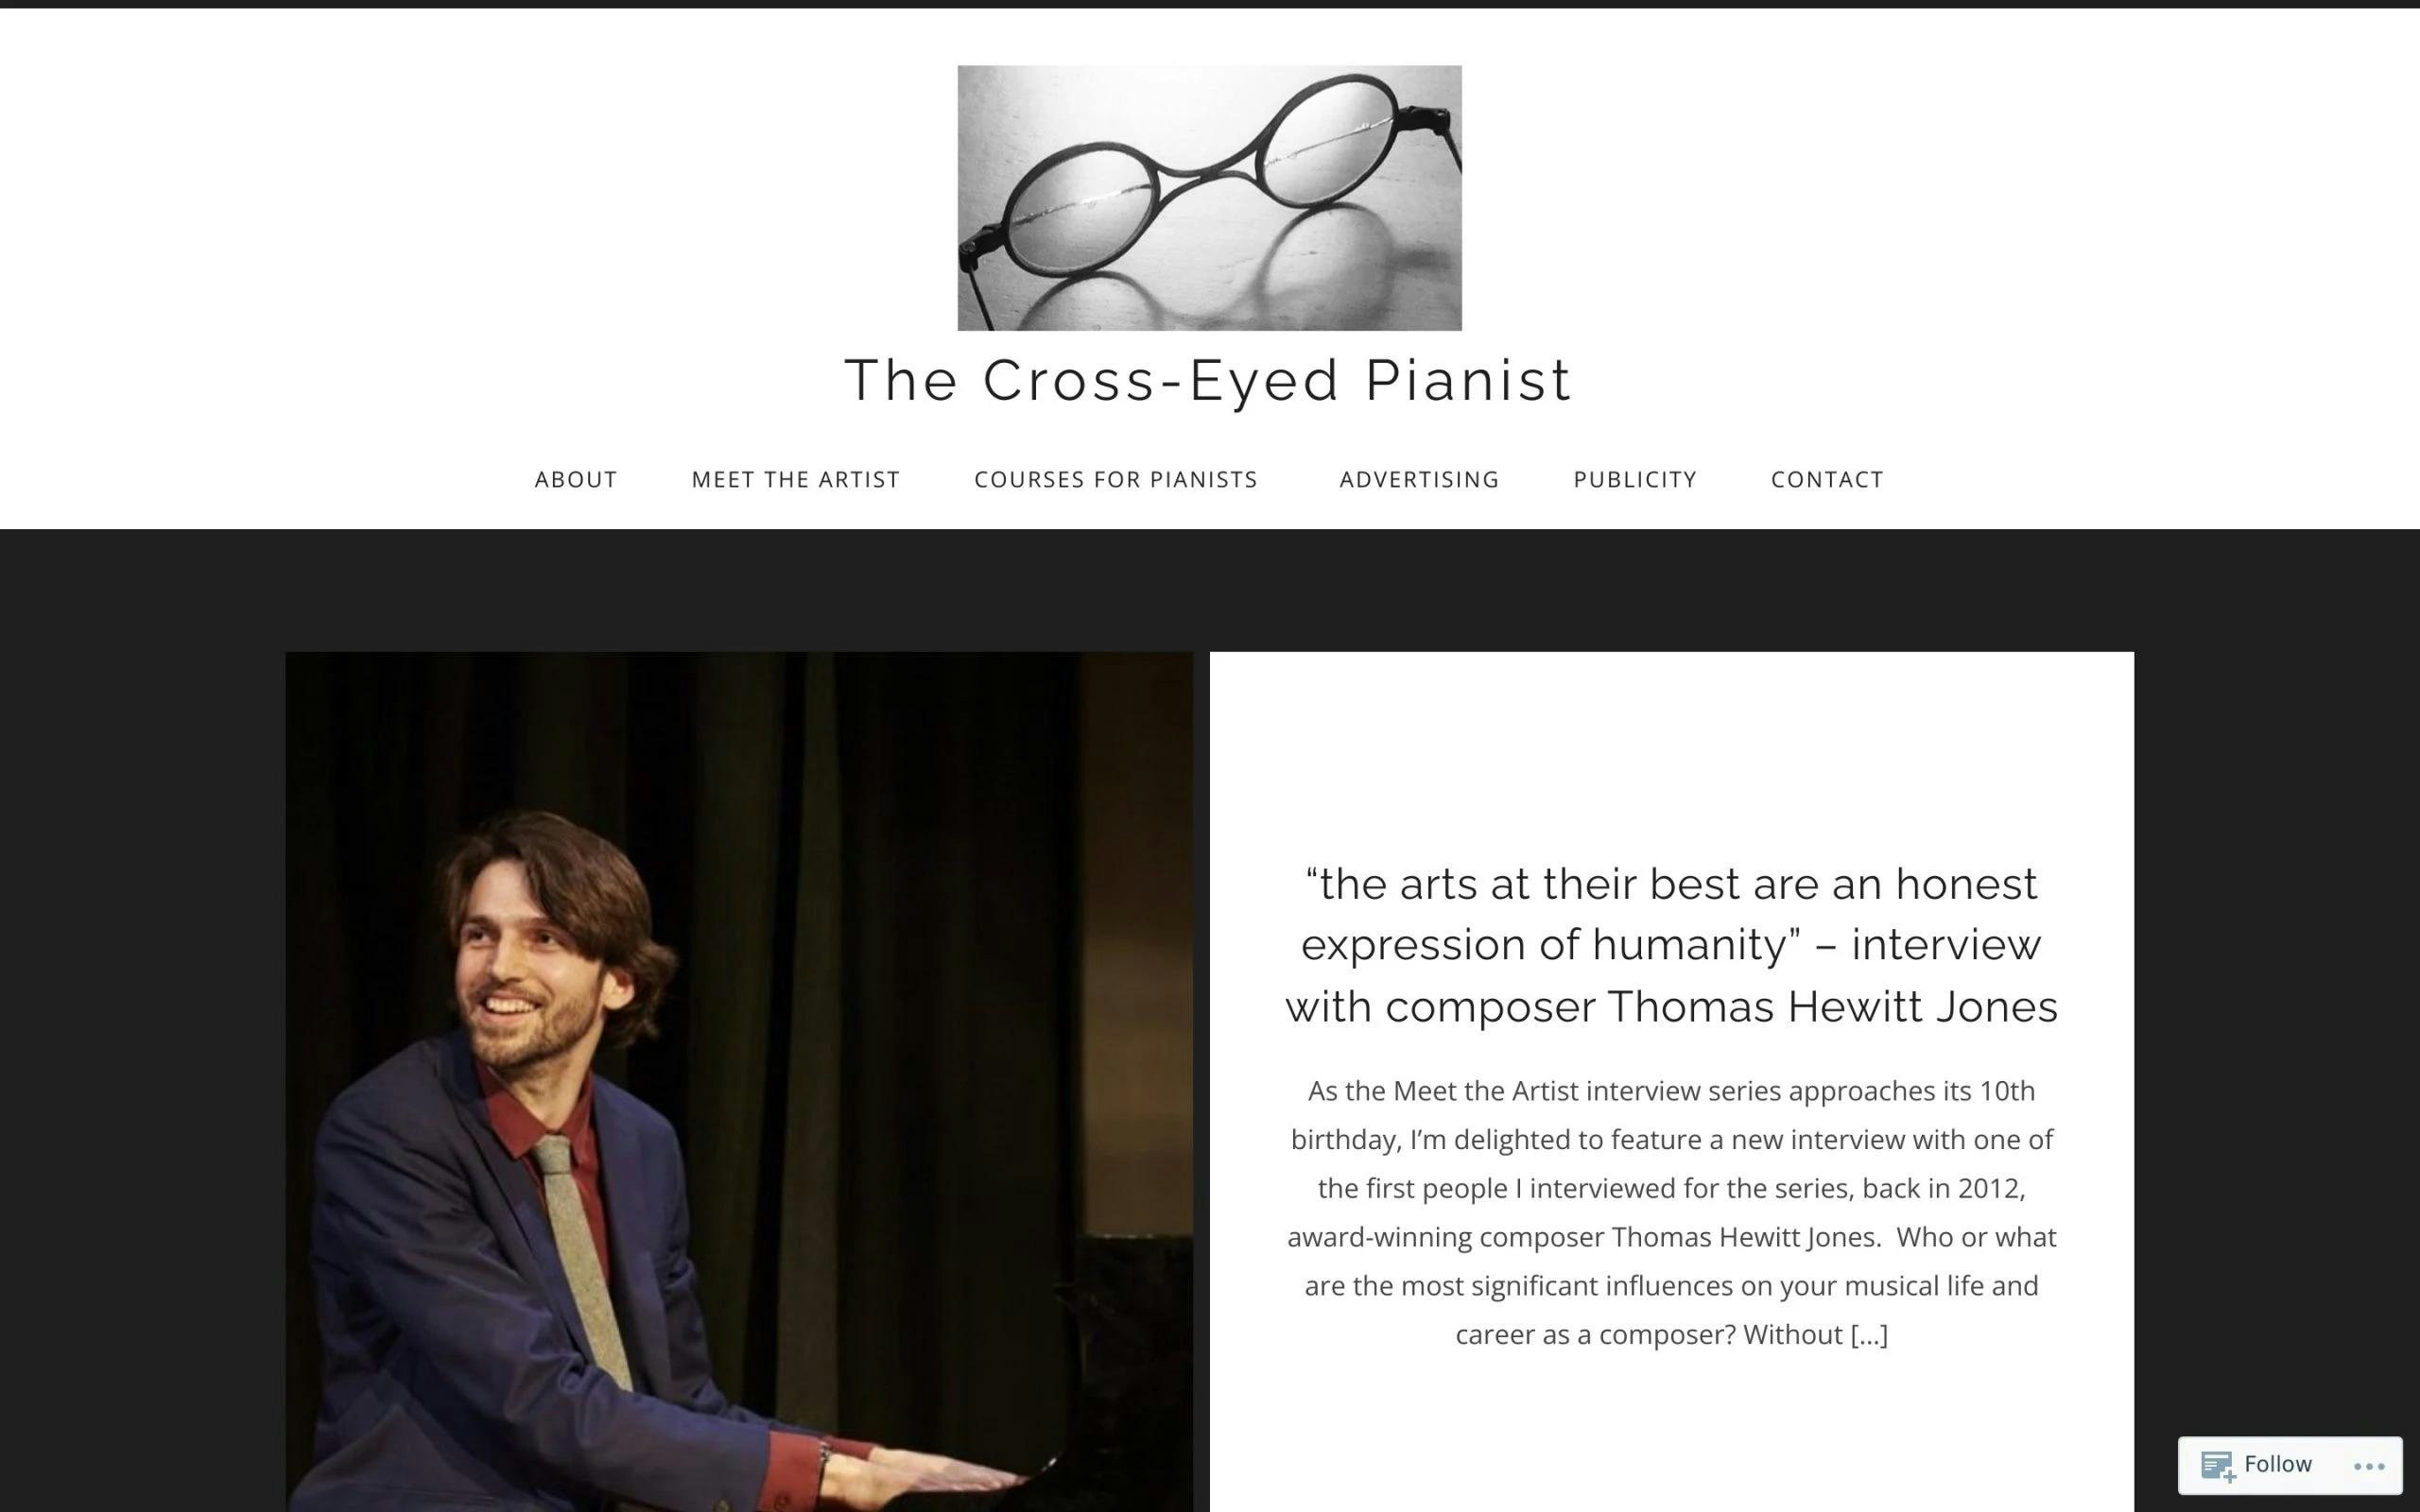 The Cross-Eyed Pianist music blog